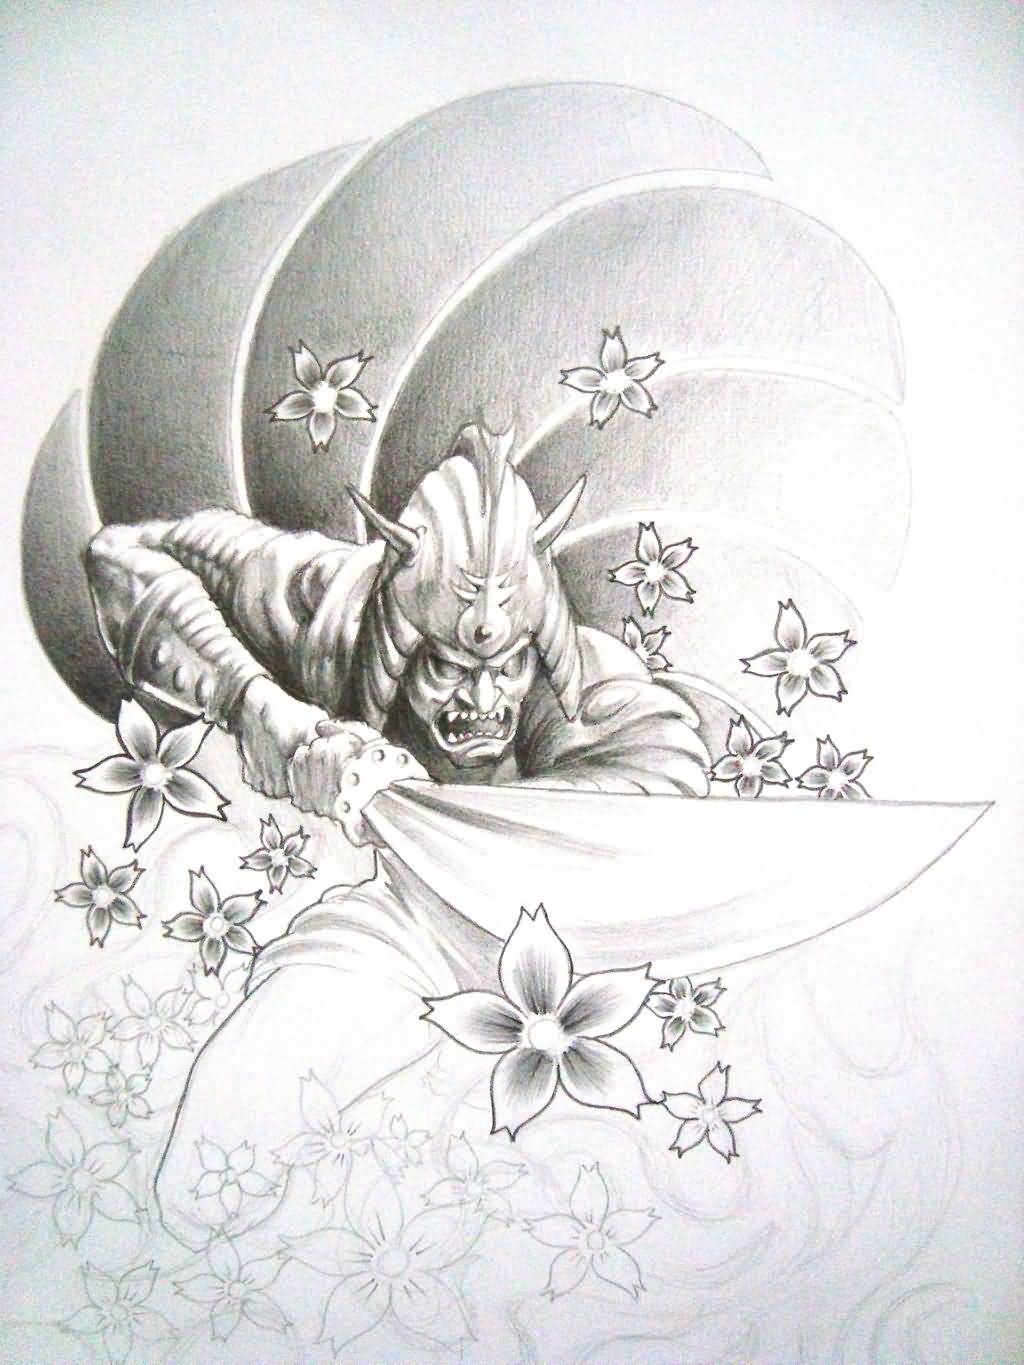 Cool Grey Ink Samurai With Flowers Tattoo Design By Mauricio Sagui